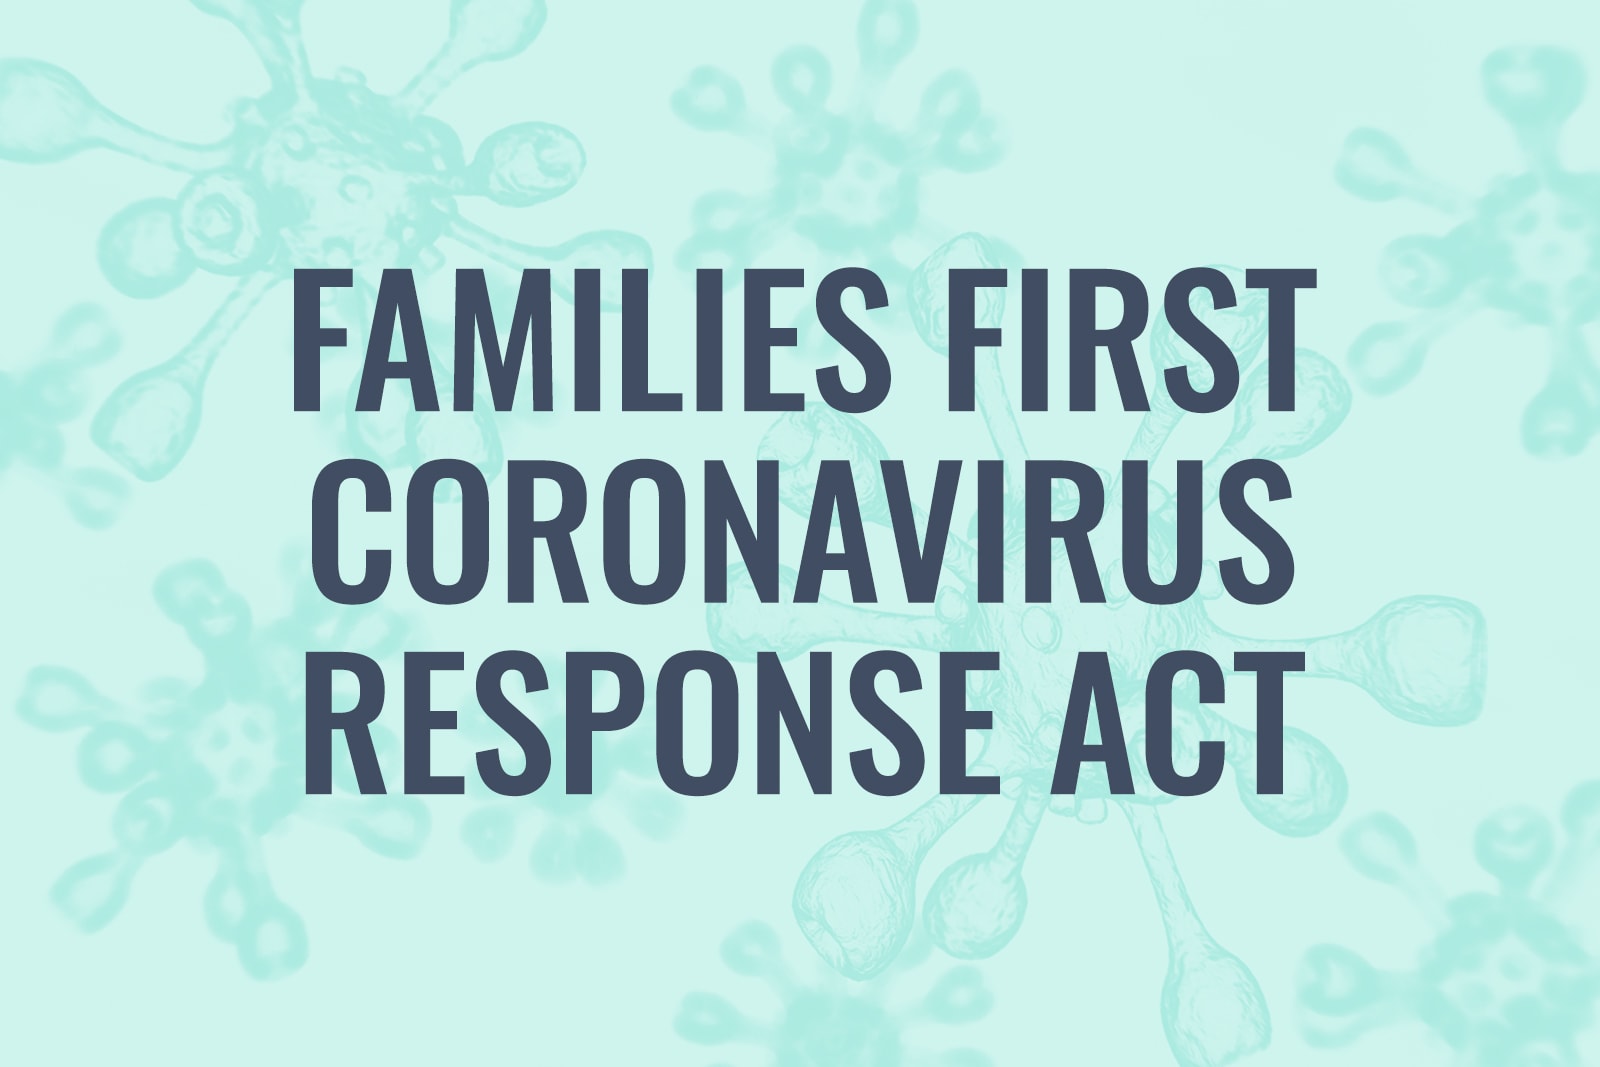 Graphic saying "Families First Coronavirus Response Act"